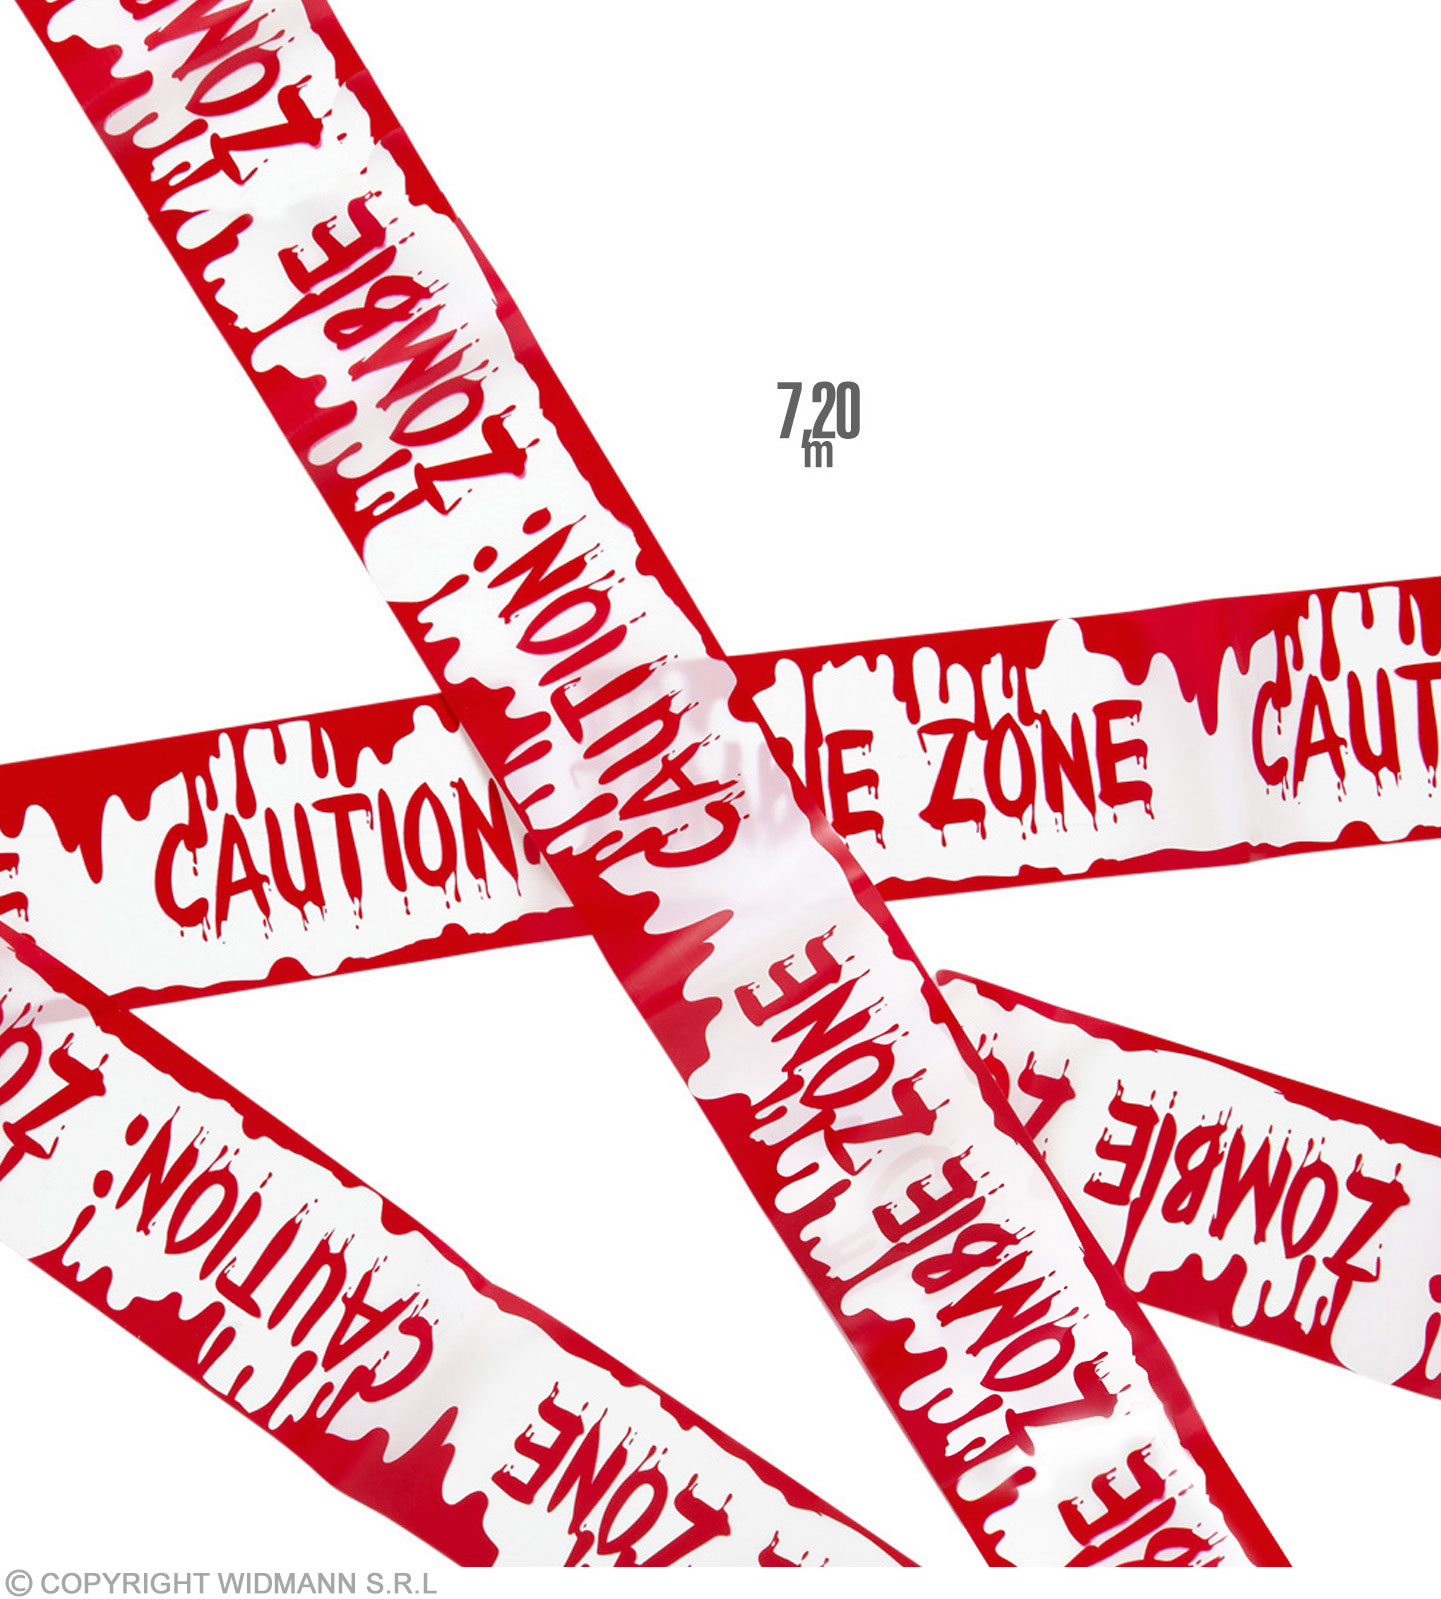 Absperrband, Caution - Zombie Zone 